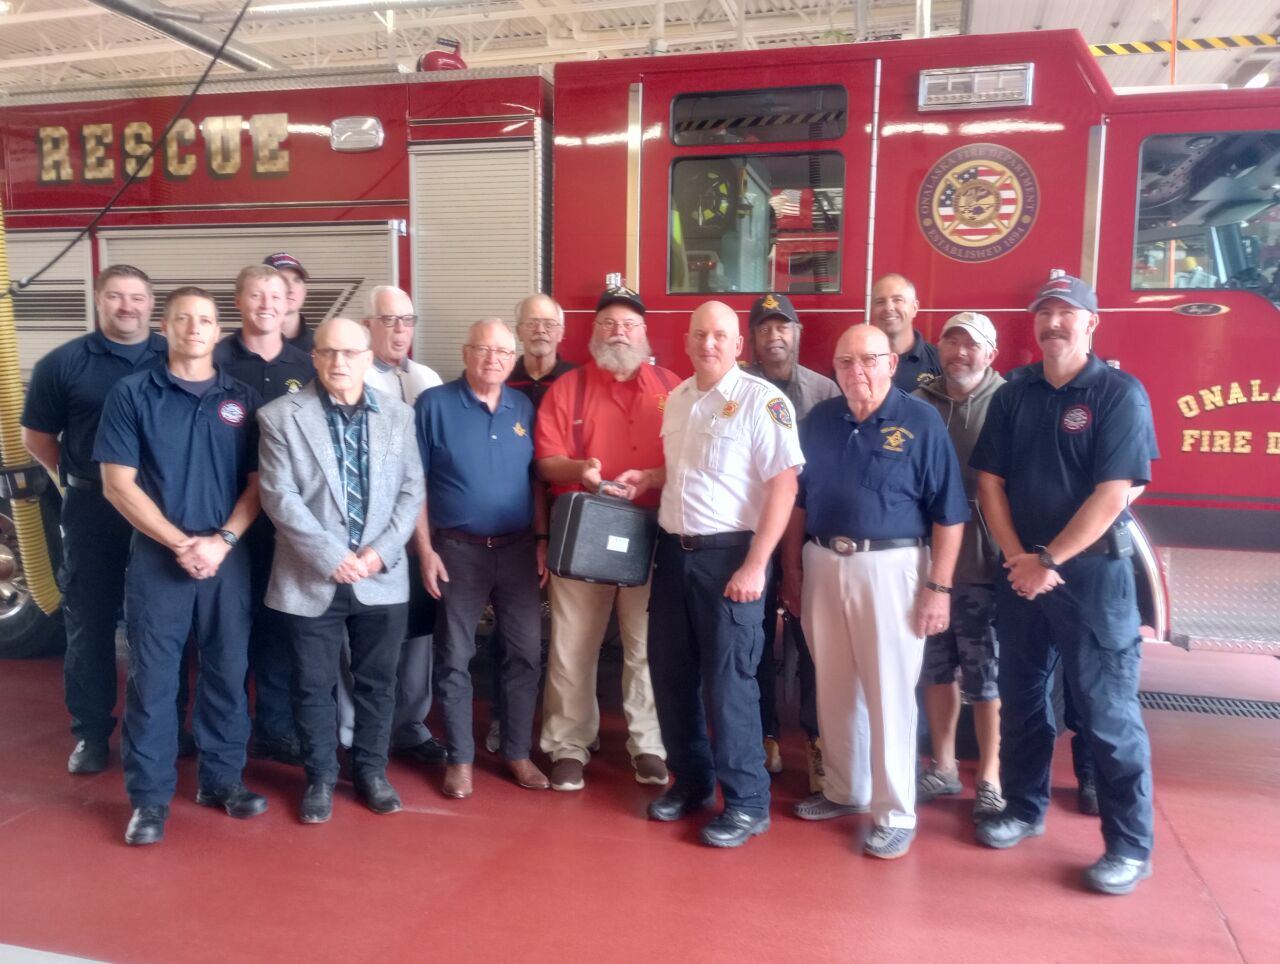 Local Masonic Lodge members donate new equipment to the Onalaska Fire Department